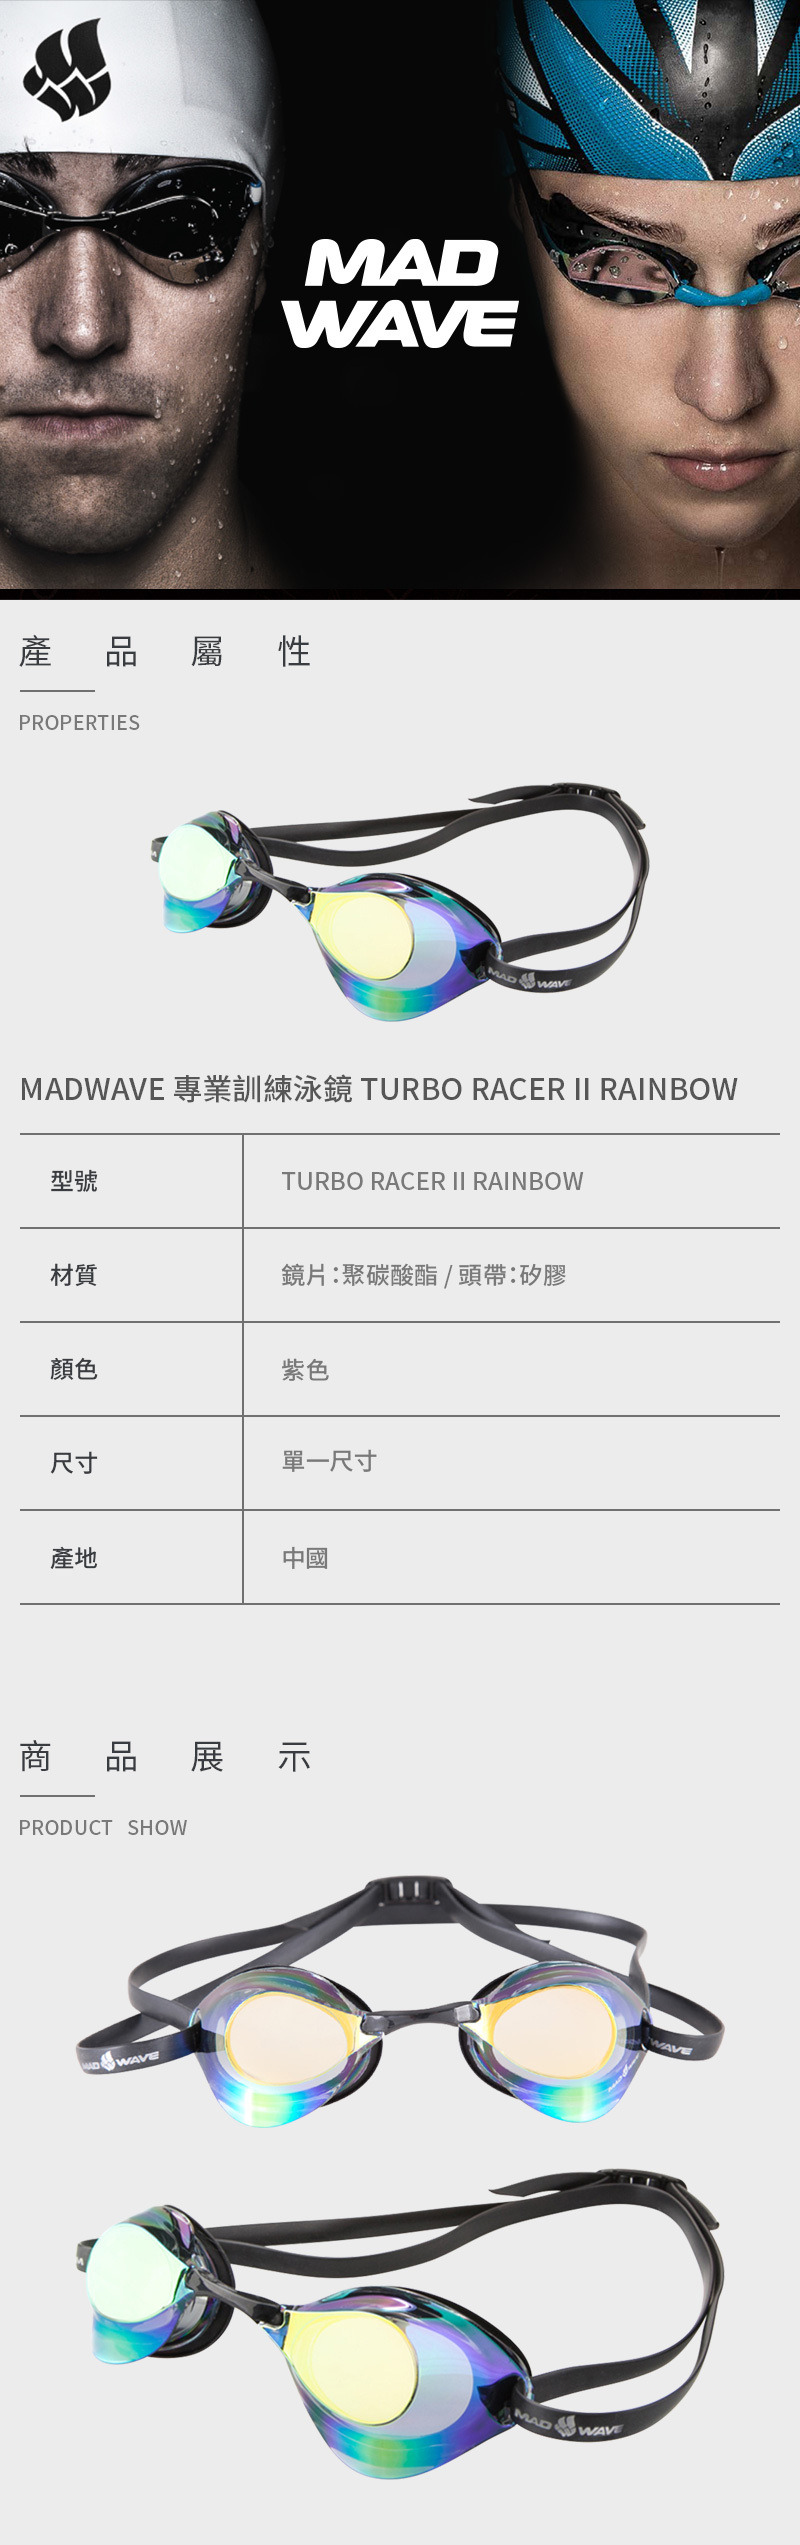 【MADWAVE】全能舒適泳鏡 TURBO RACER II RAINBOW